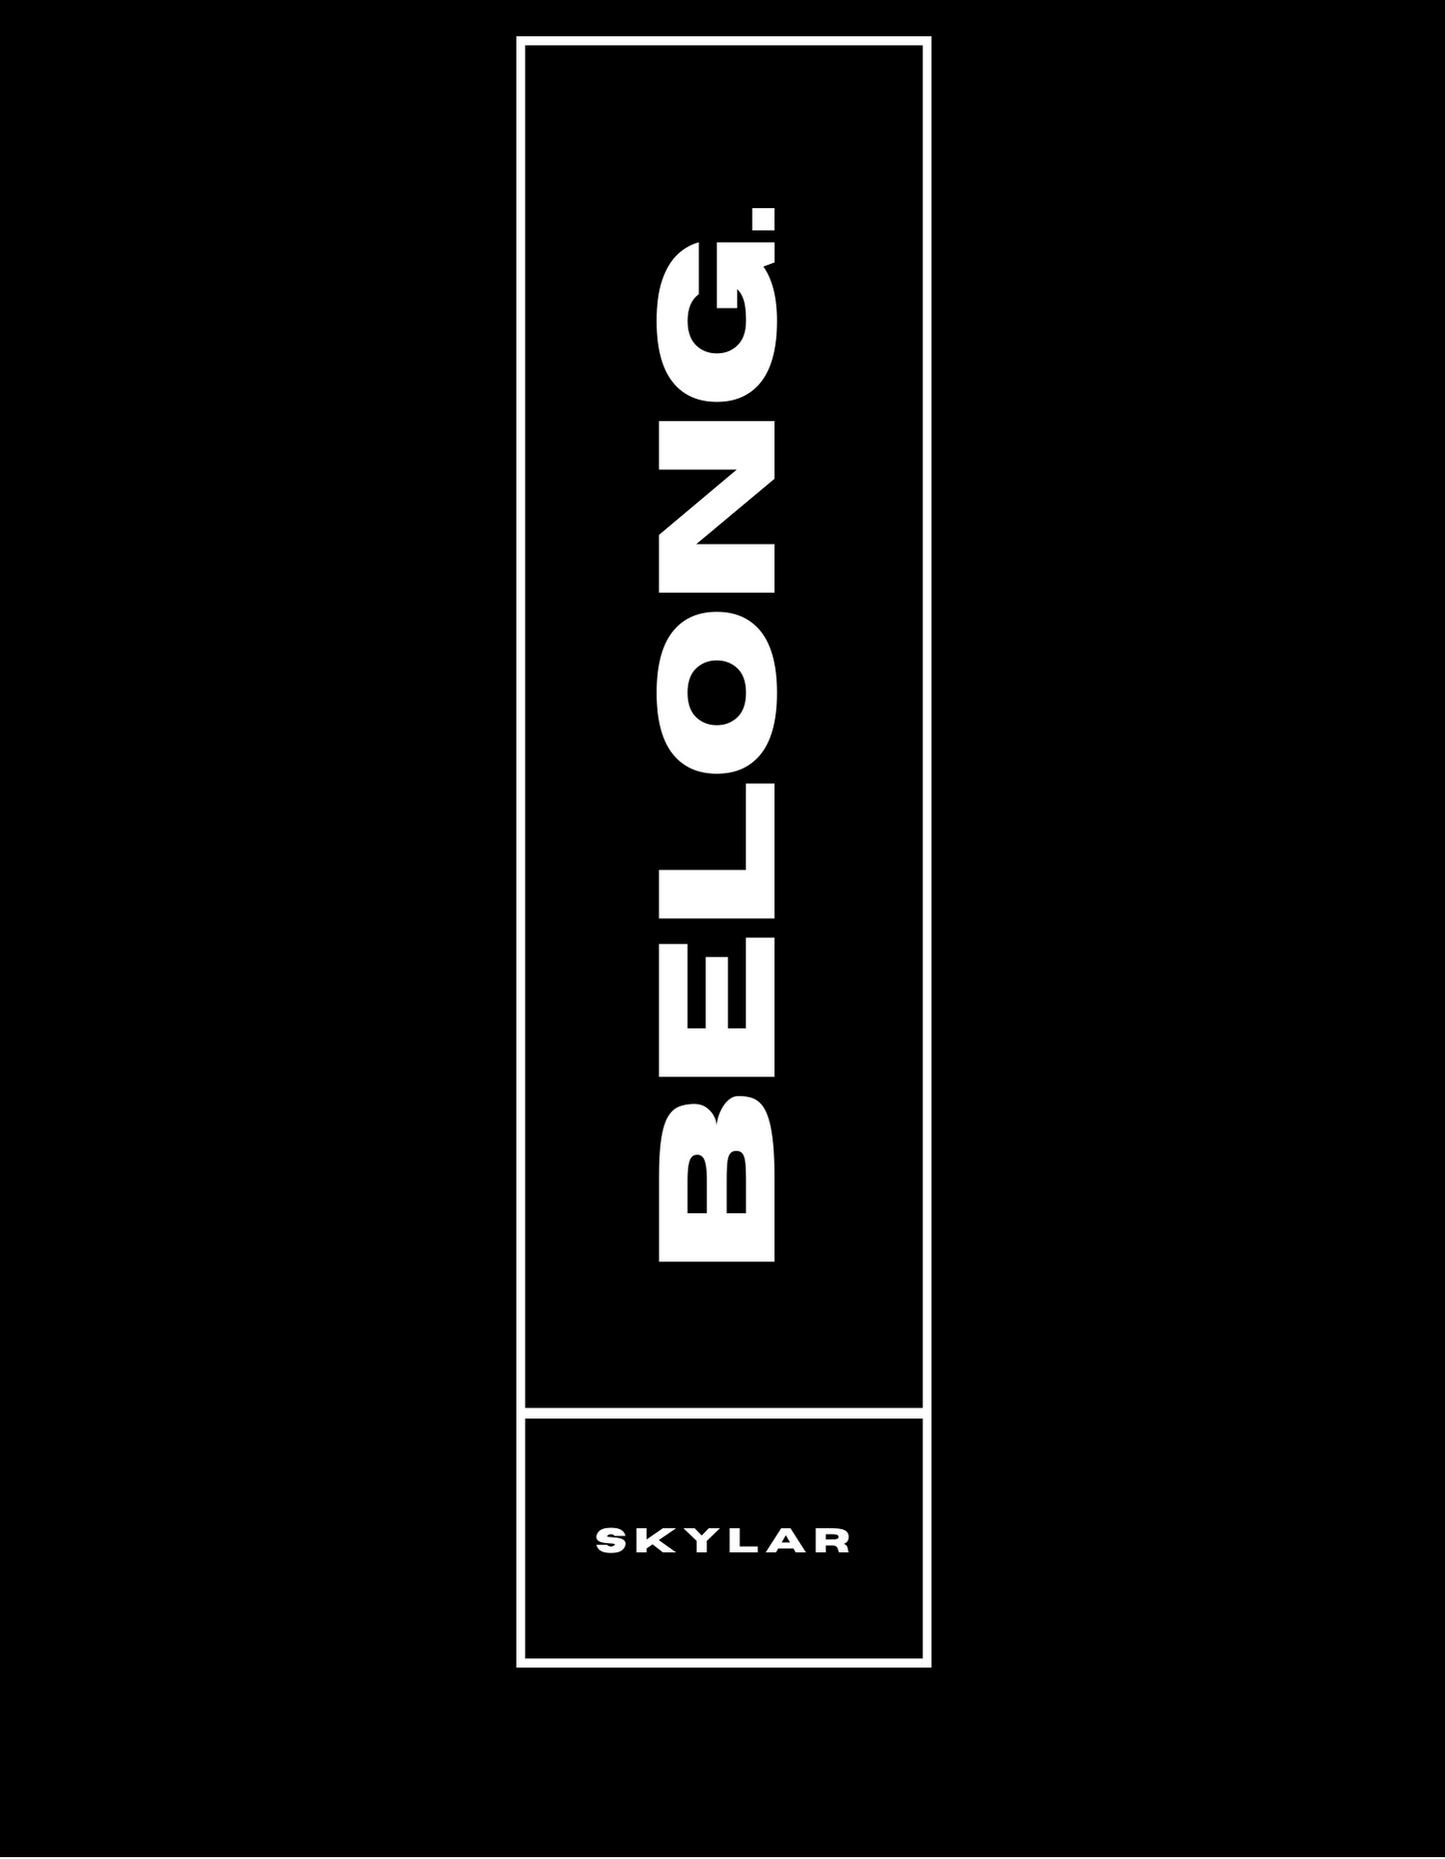 Skylar Belong Tshirt [Pending]